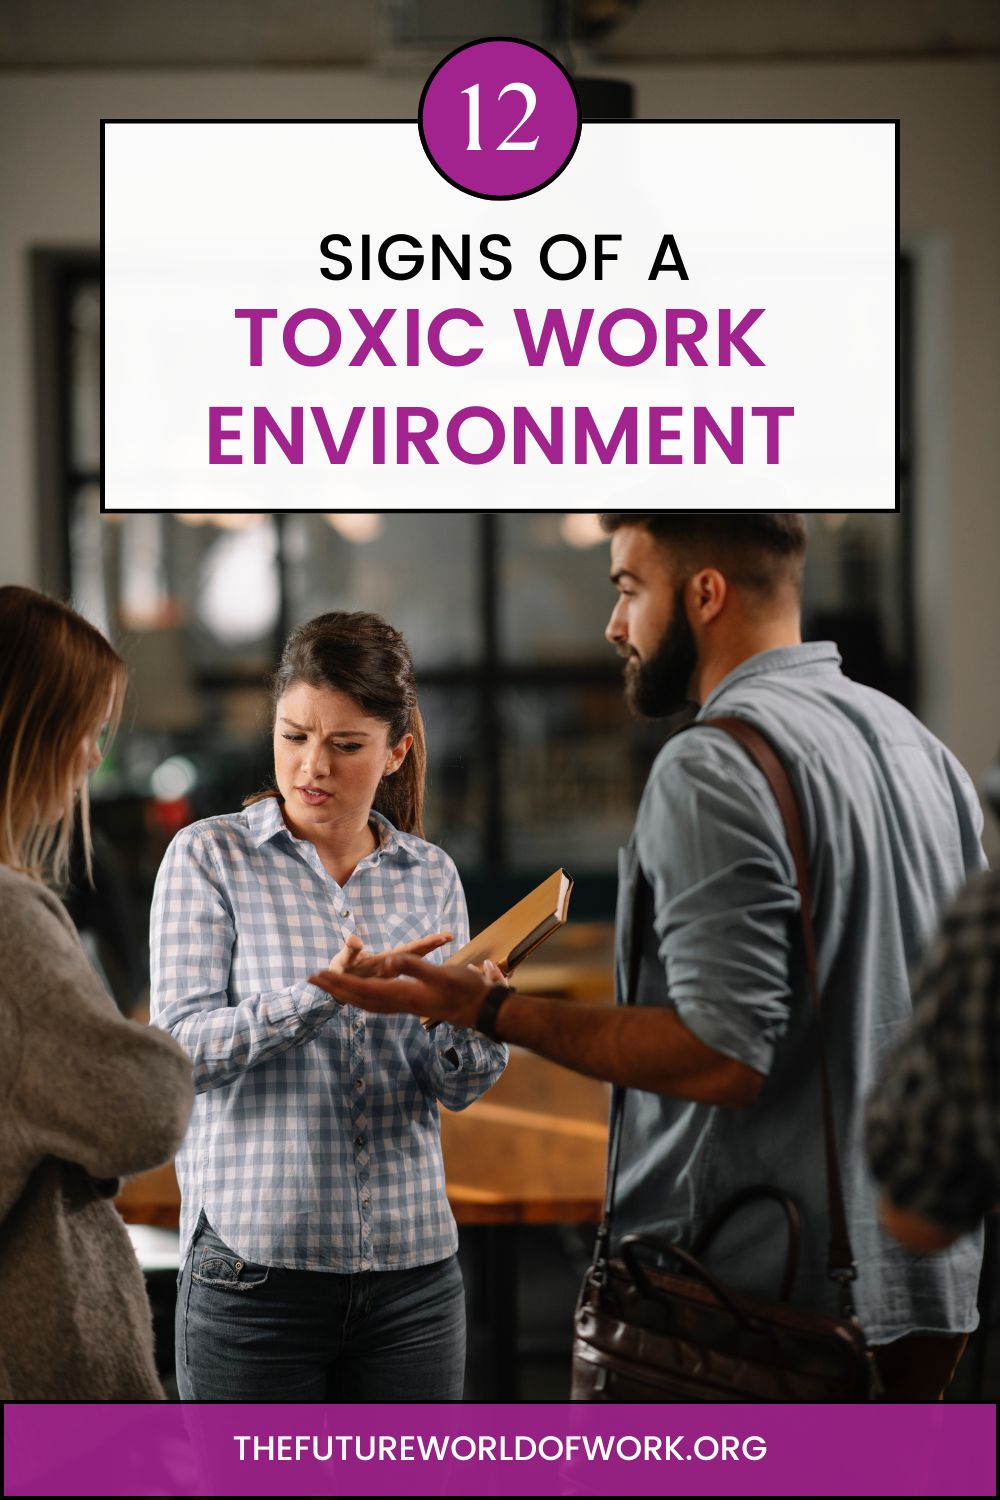 Toxic Work Environment